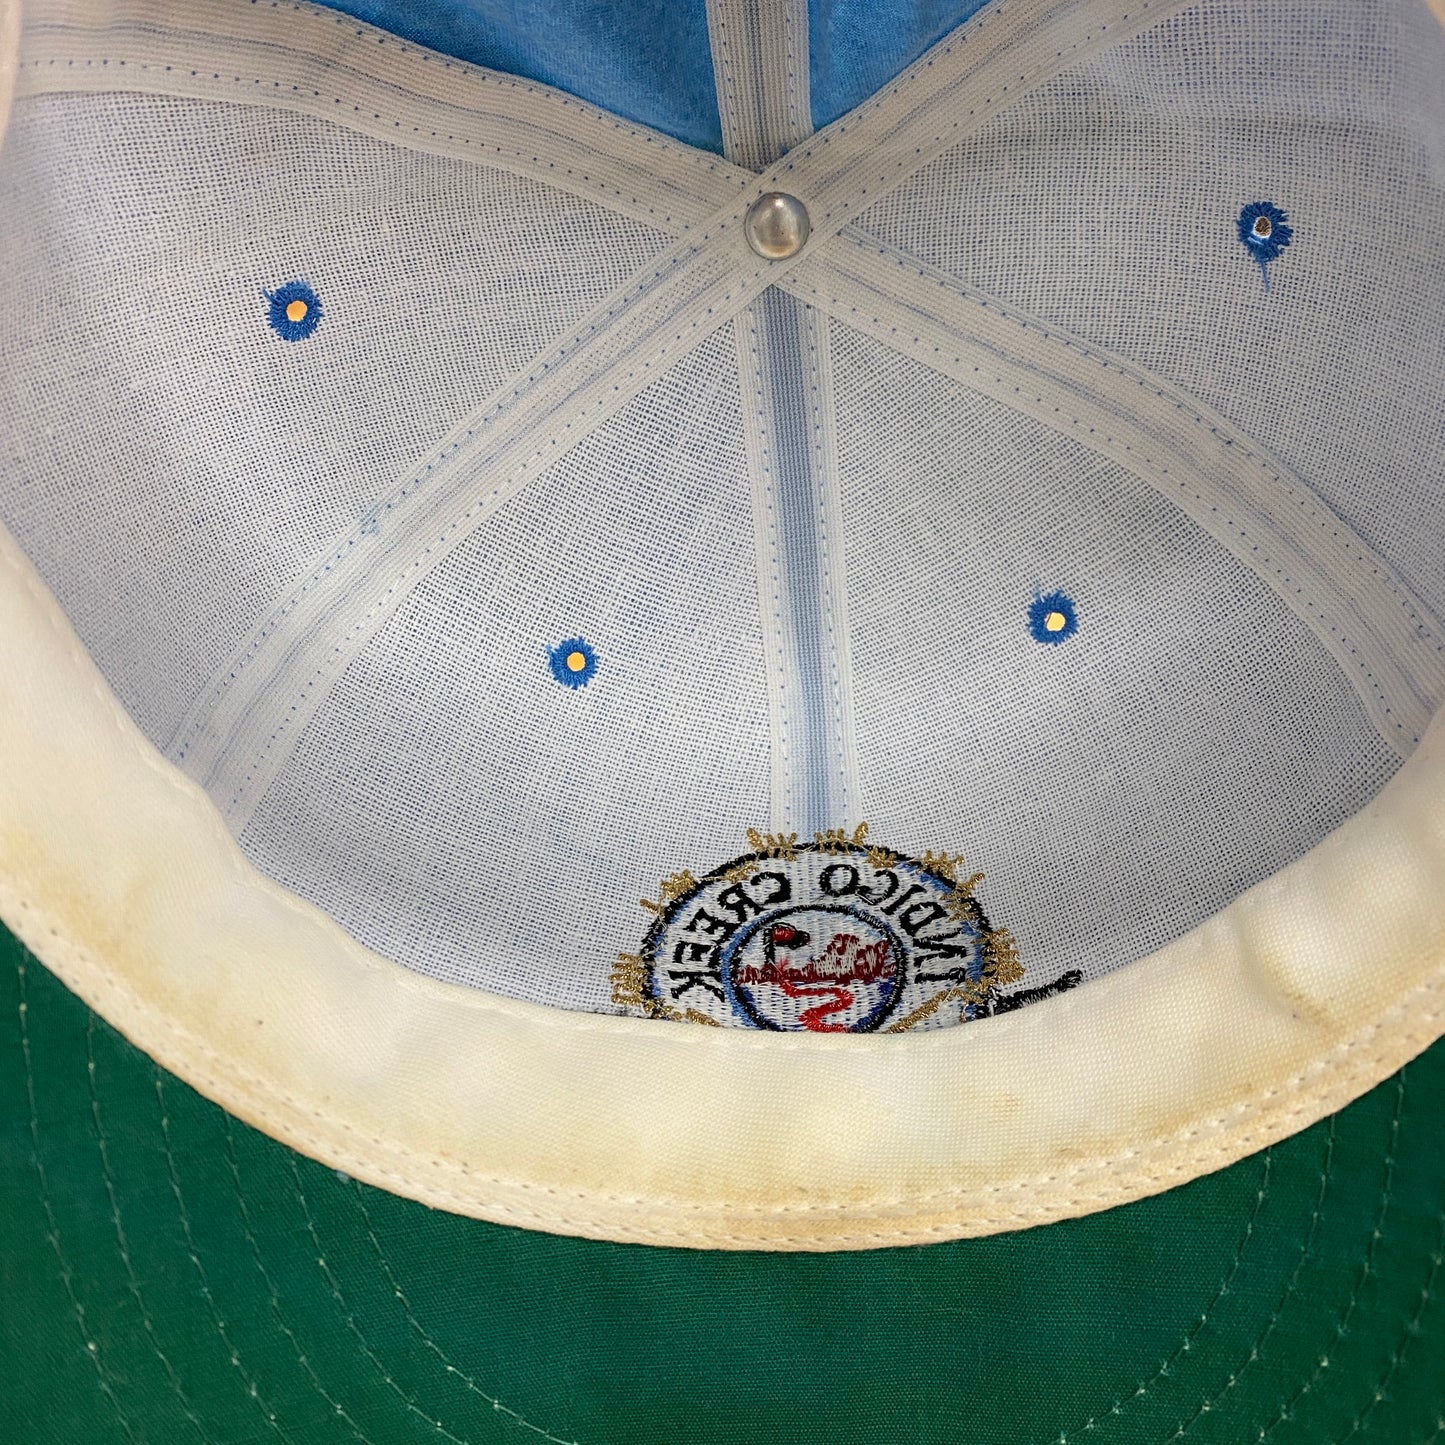 Vintage 1990s Indigo Creek Golf Club Leather Strapback Hat